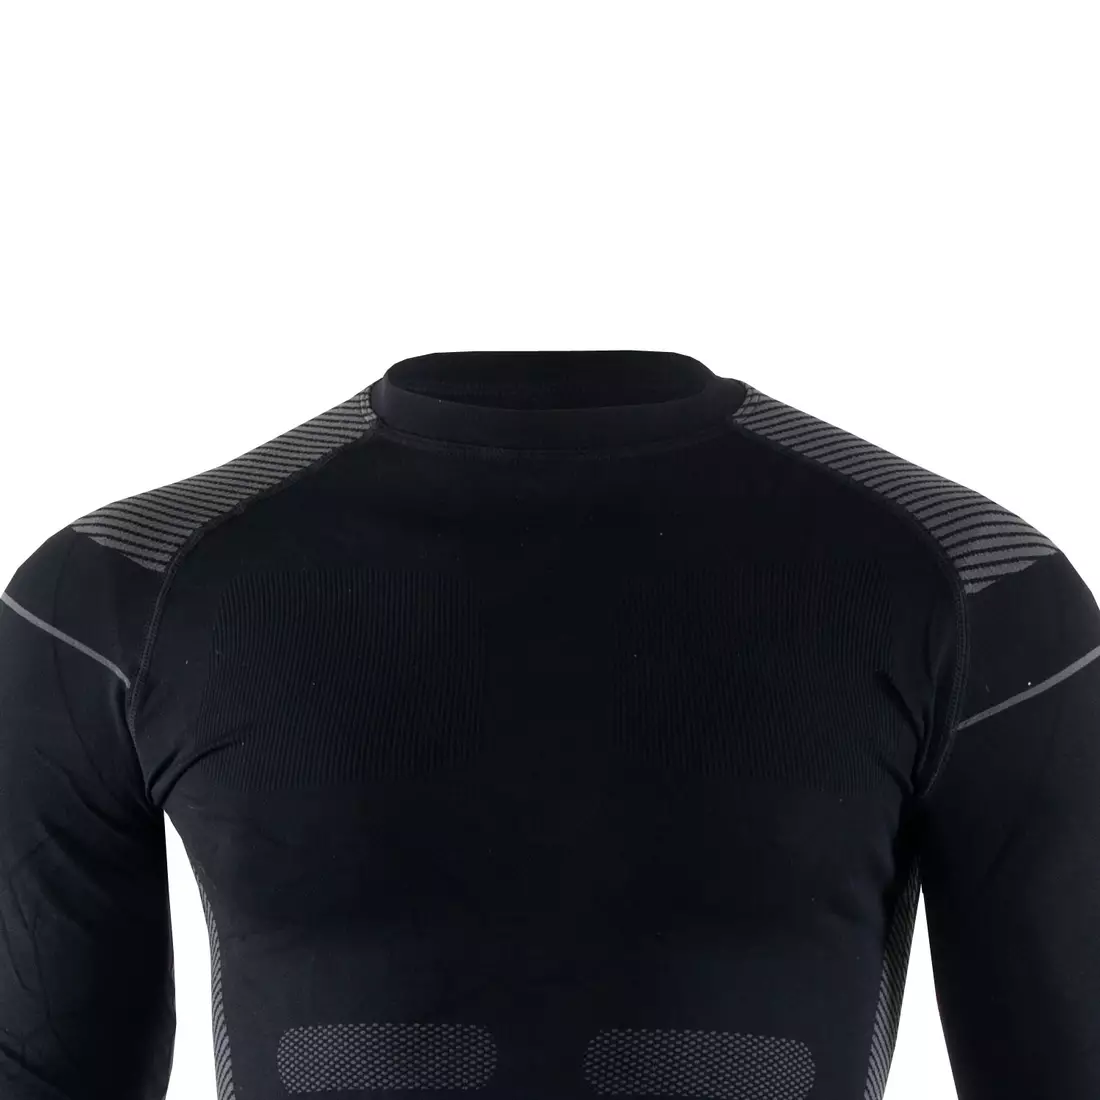 VIKING Thermoactive underwear, men's t-shirt, Efer black 500/16/1745/08